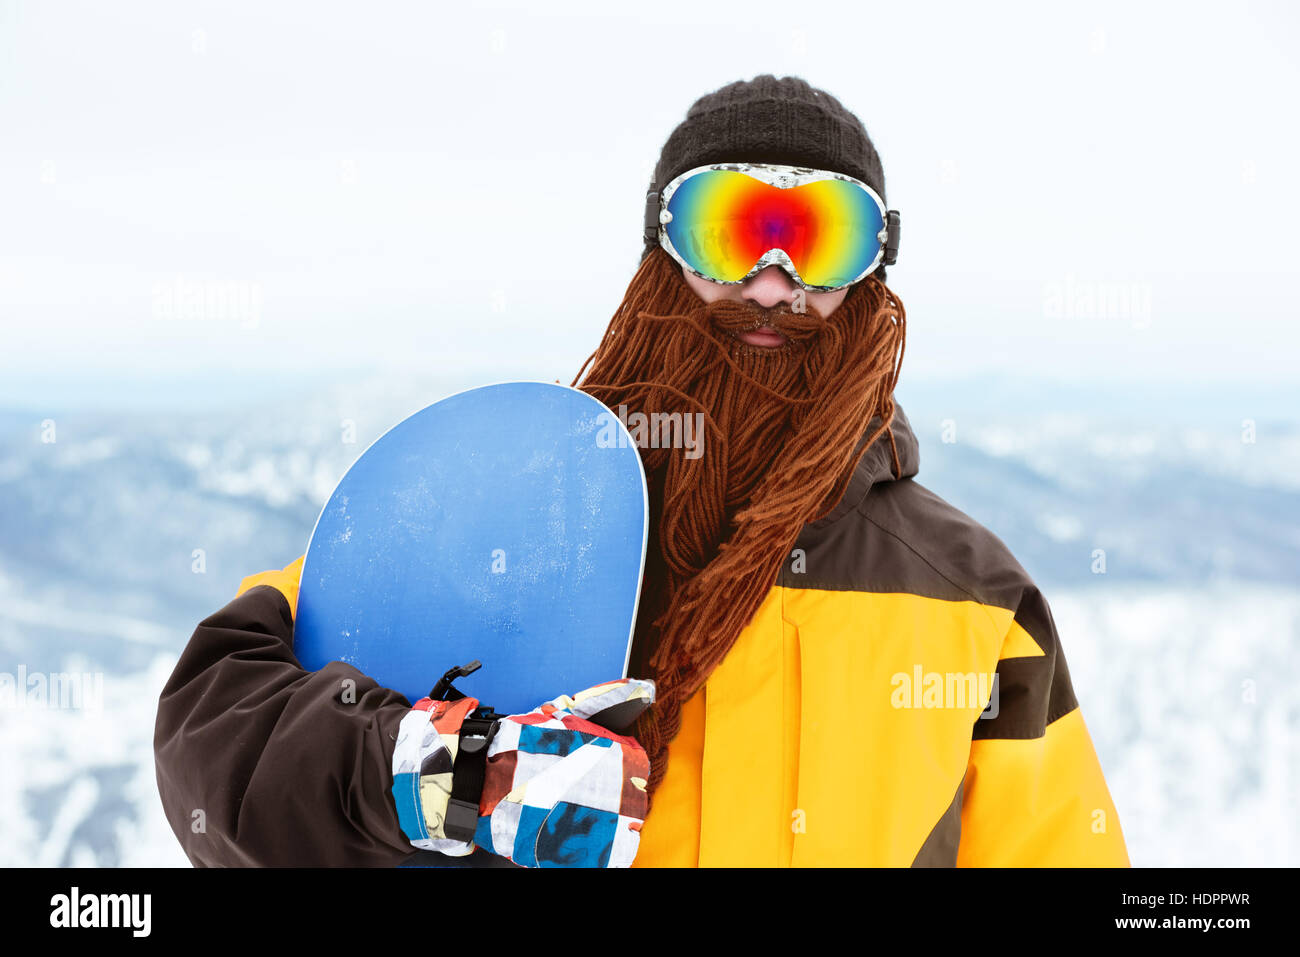 Snowboarder fun funny beard snowboard Stock Photo